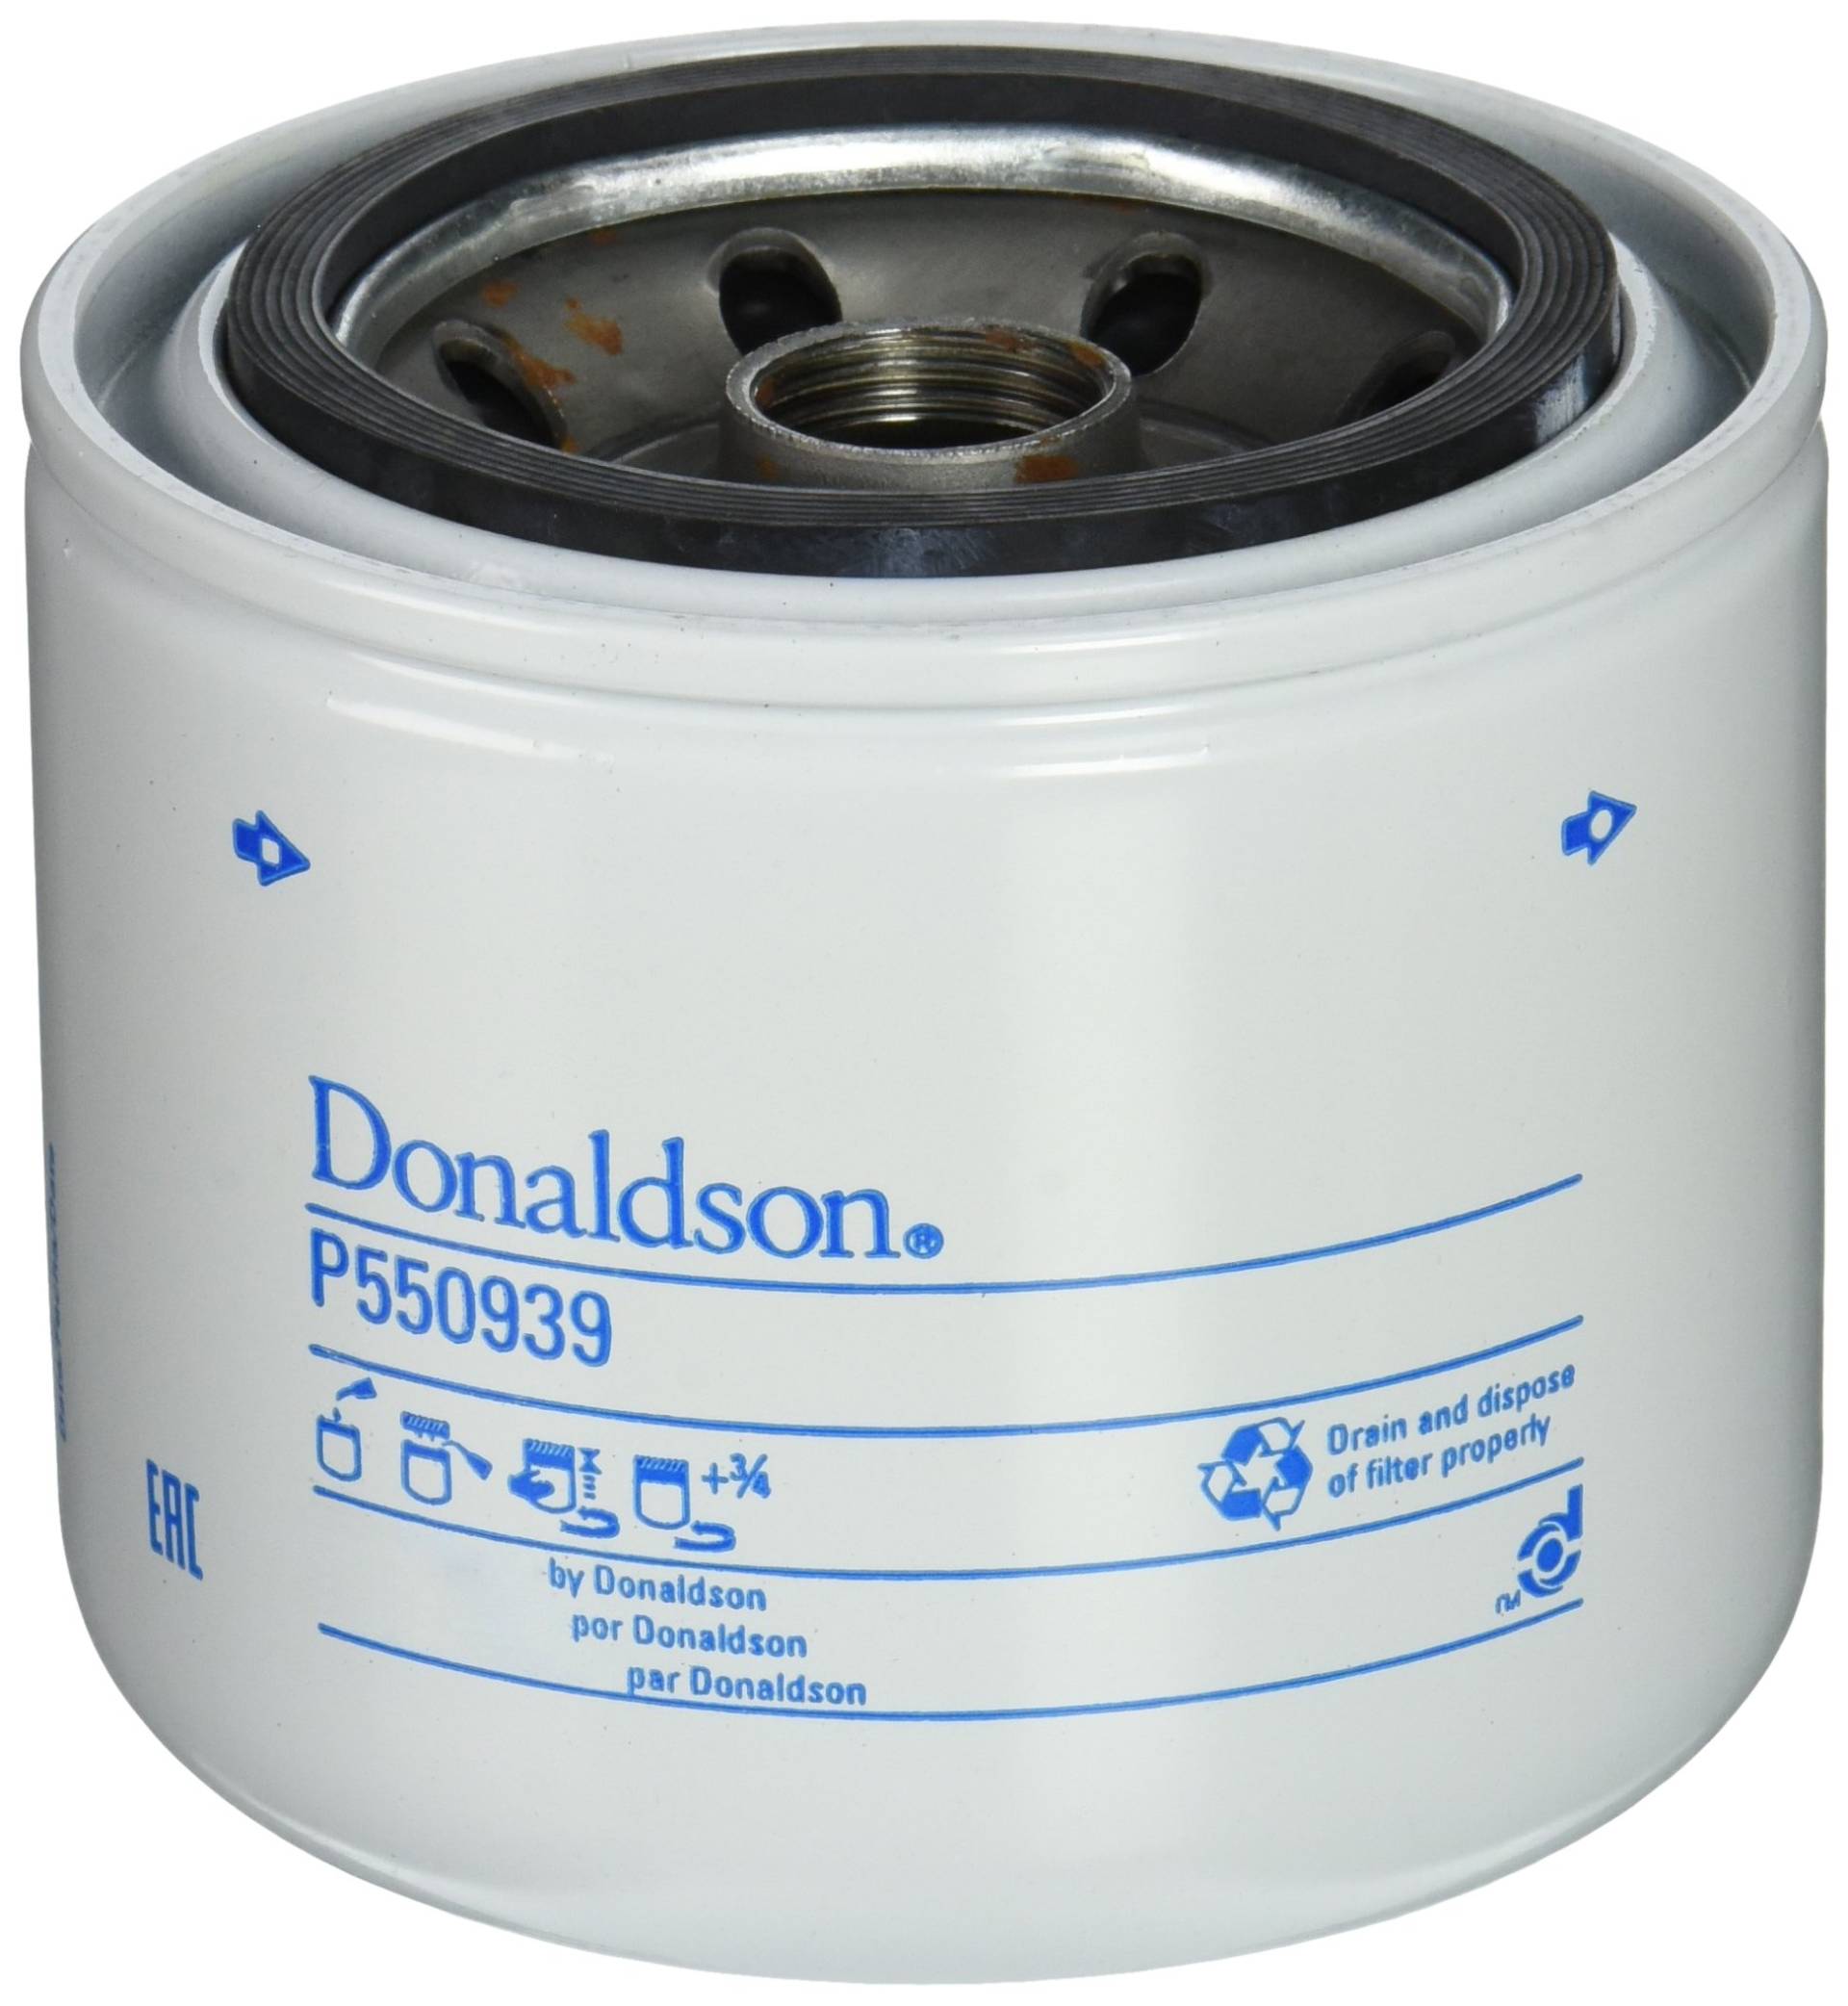 Donaldson P550939 Lube Filter (Full Flow, Spin-on) von Donaldson